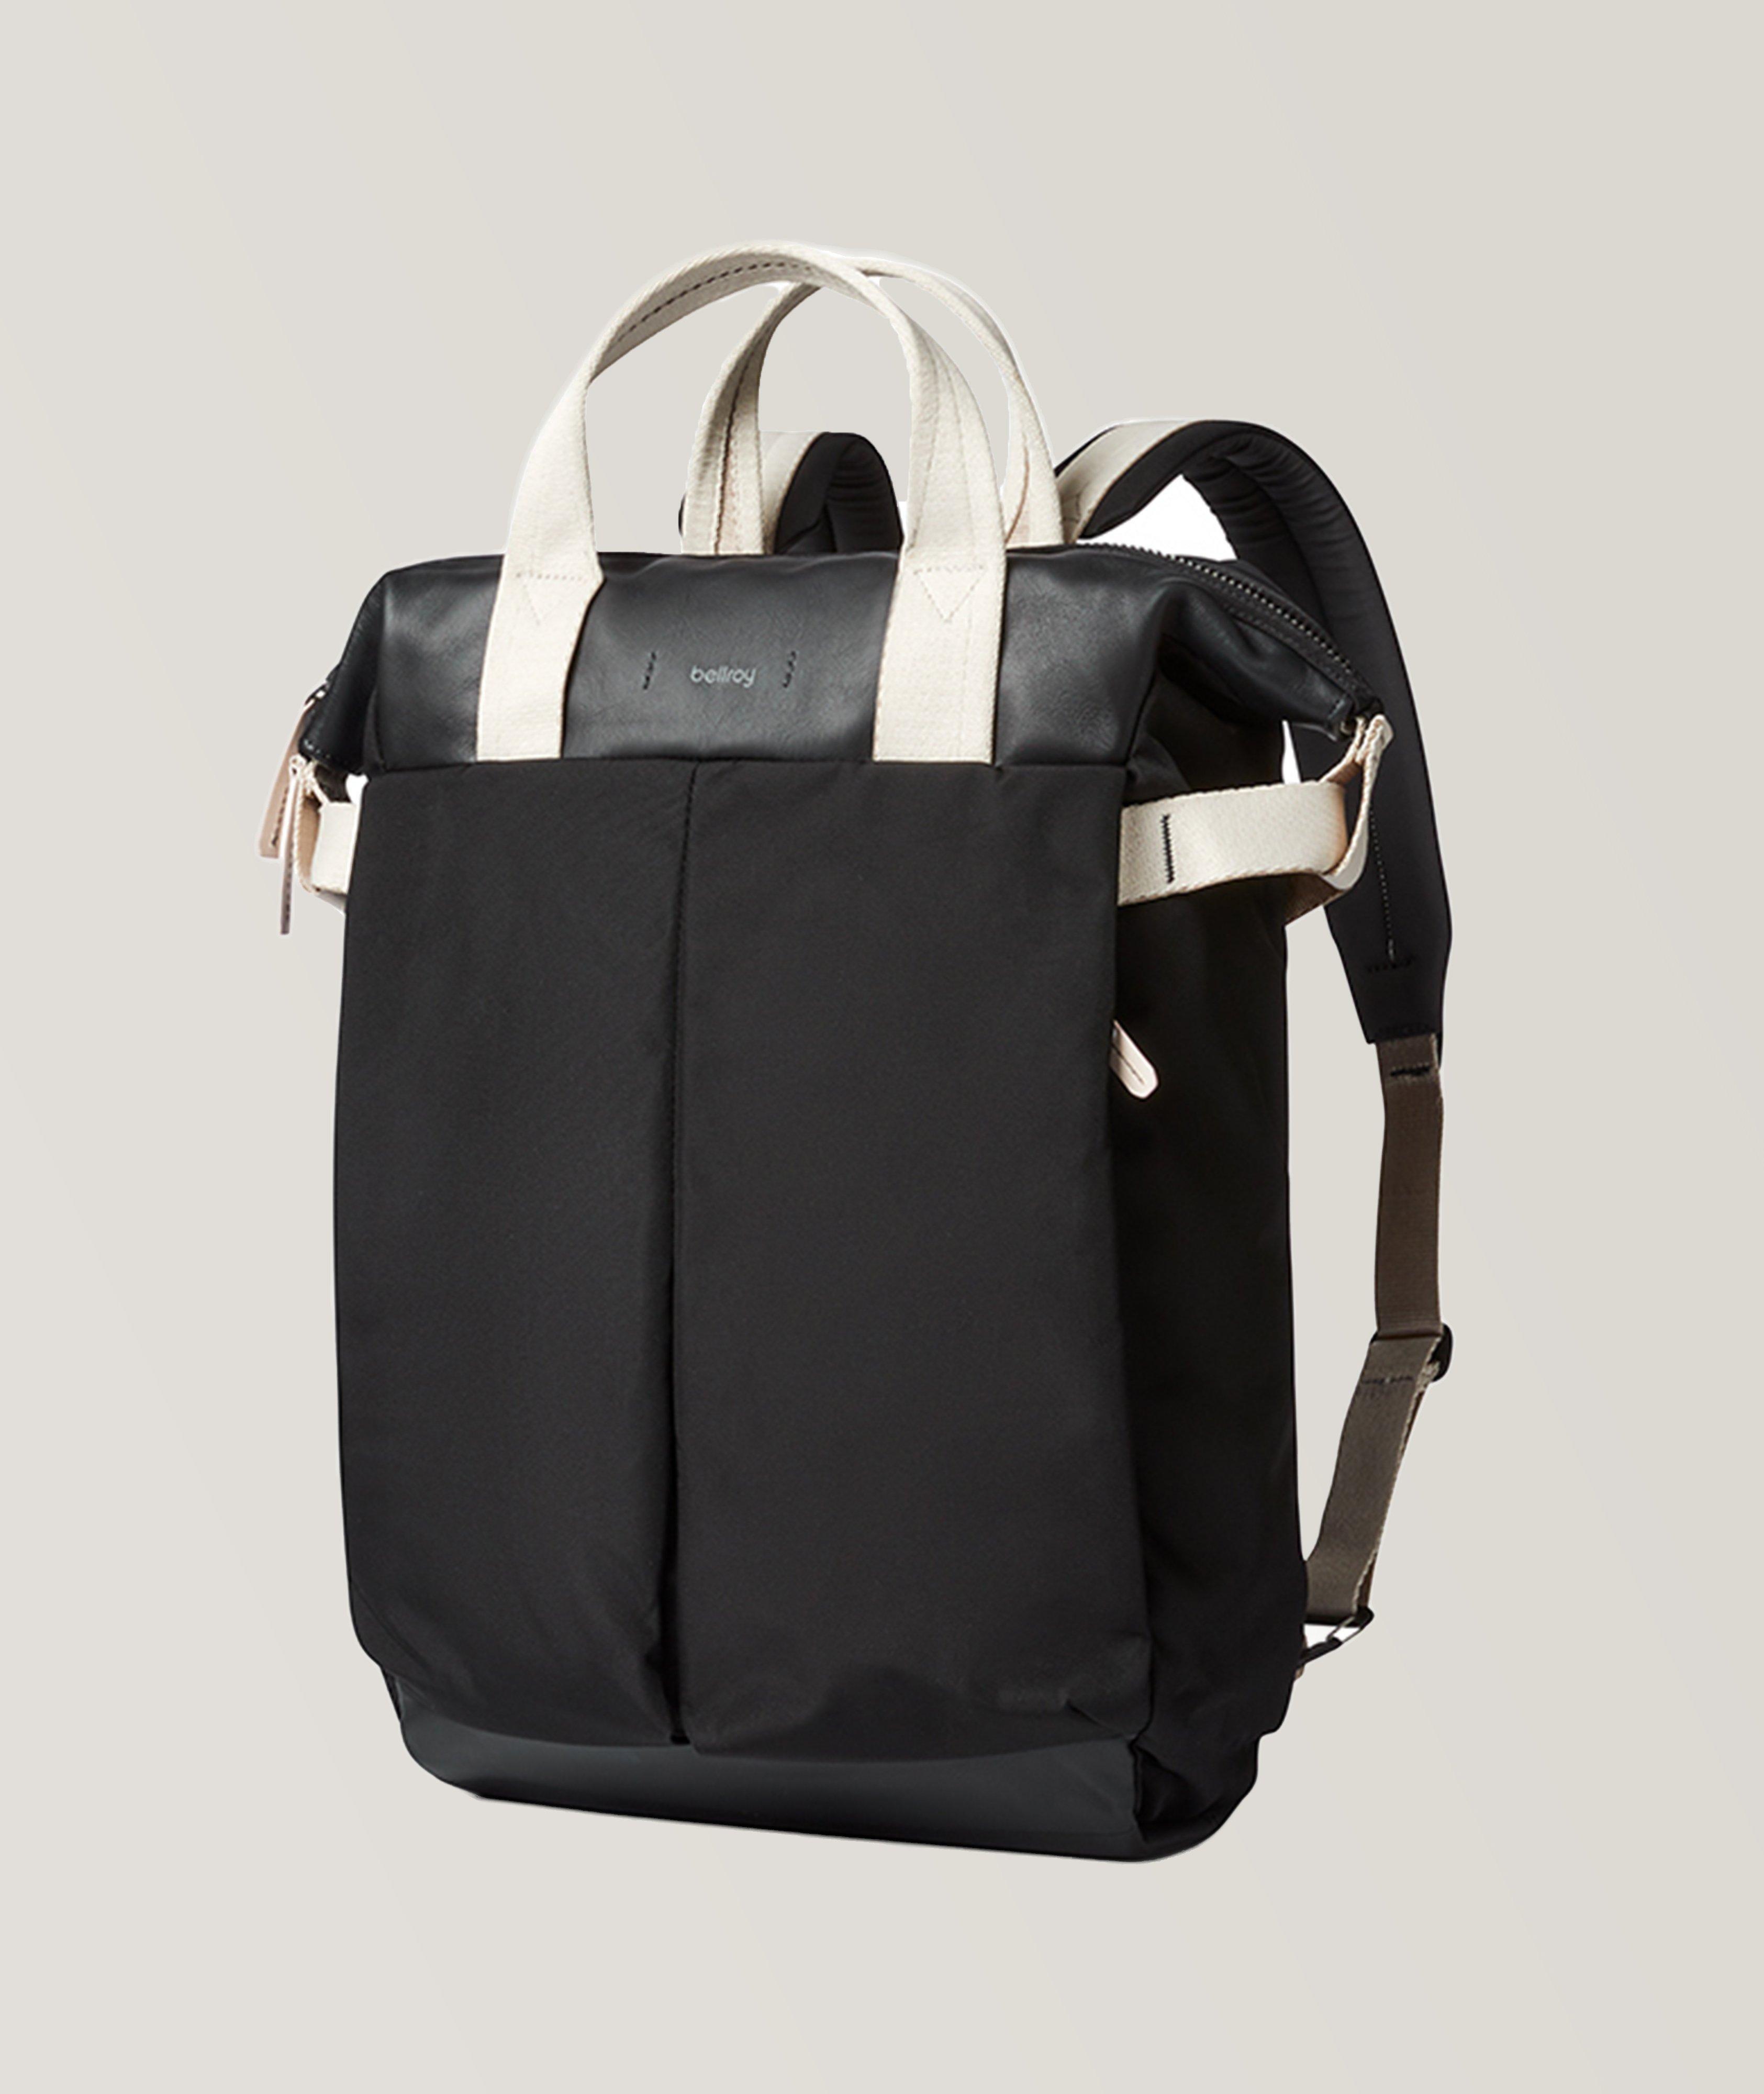 Bellroy Tokyo Totepack Premium Backpack | Bags & Cases | Harry Rosen